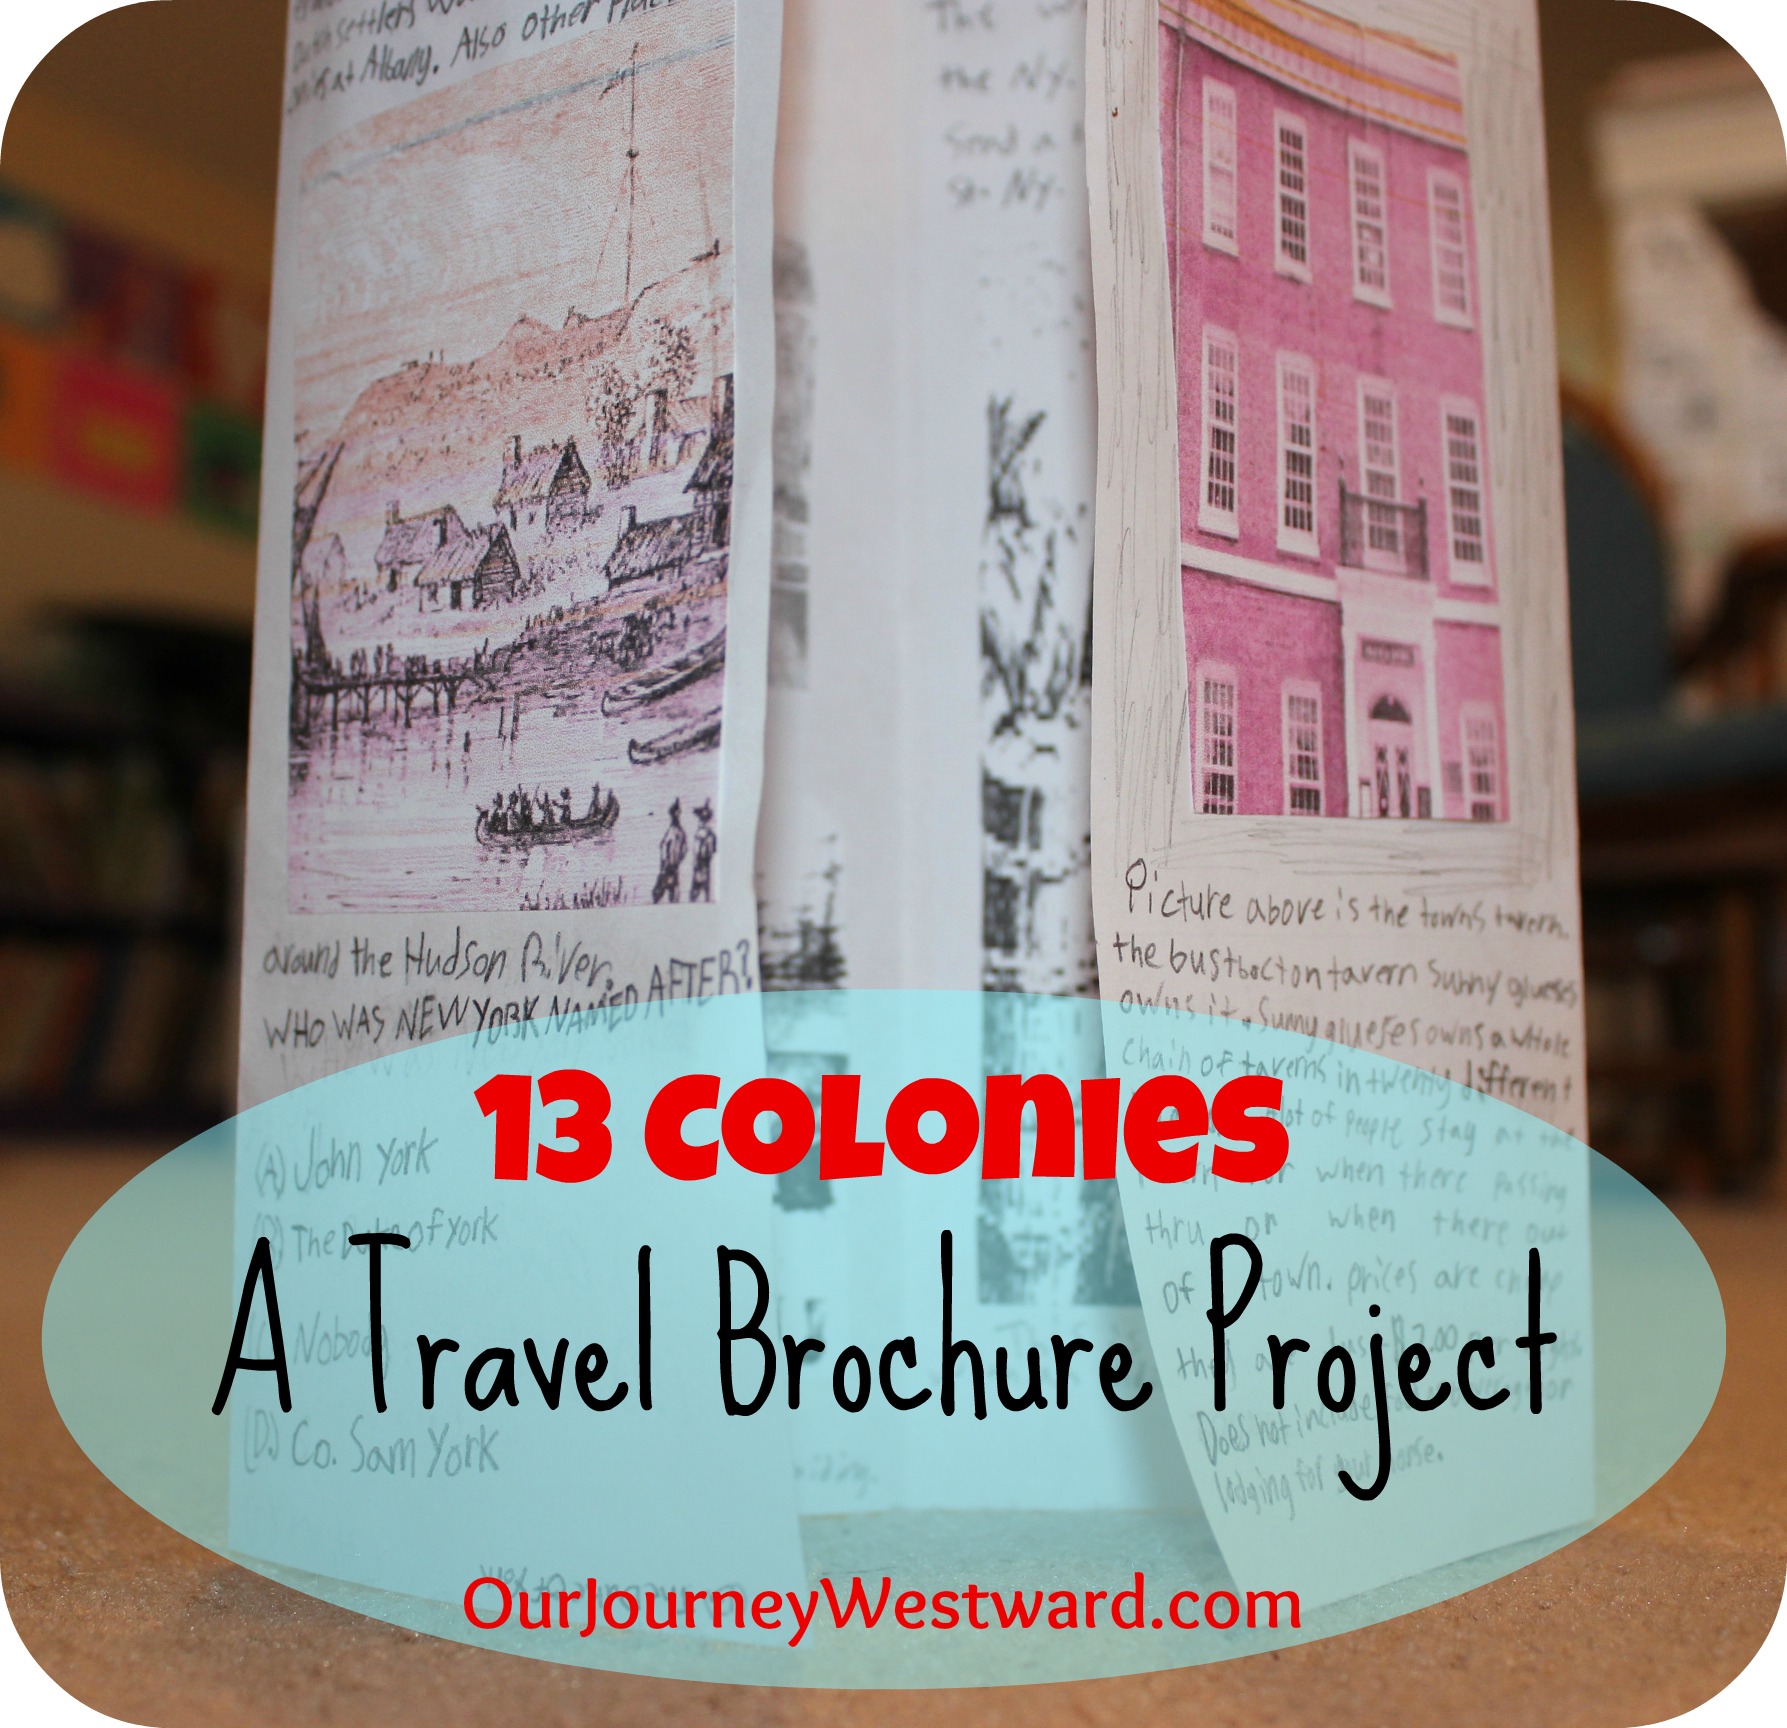 thirteen colonies travel brochure